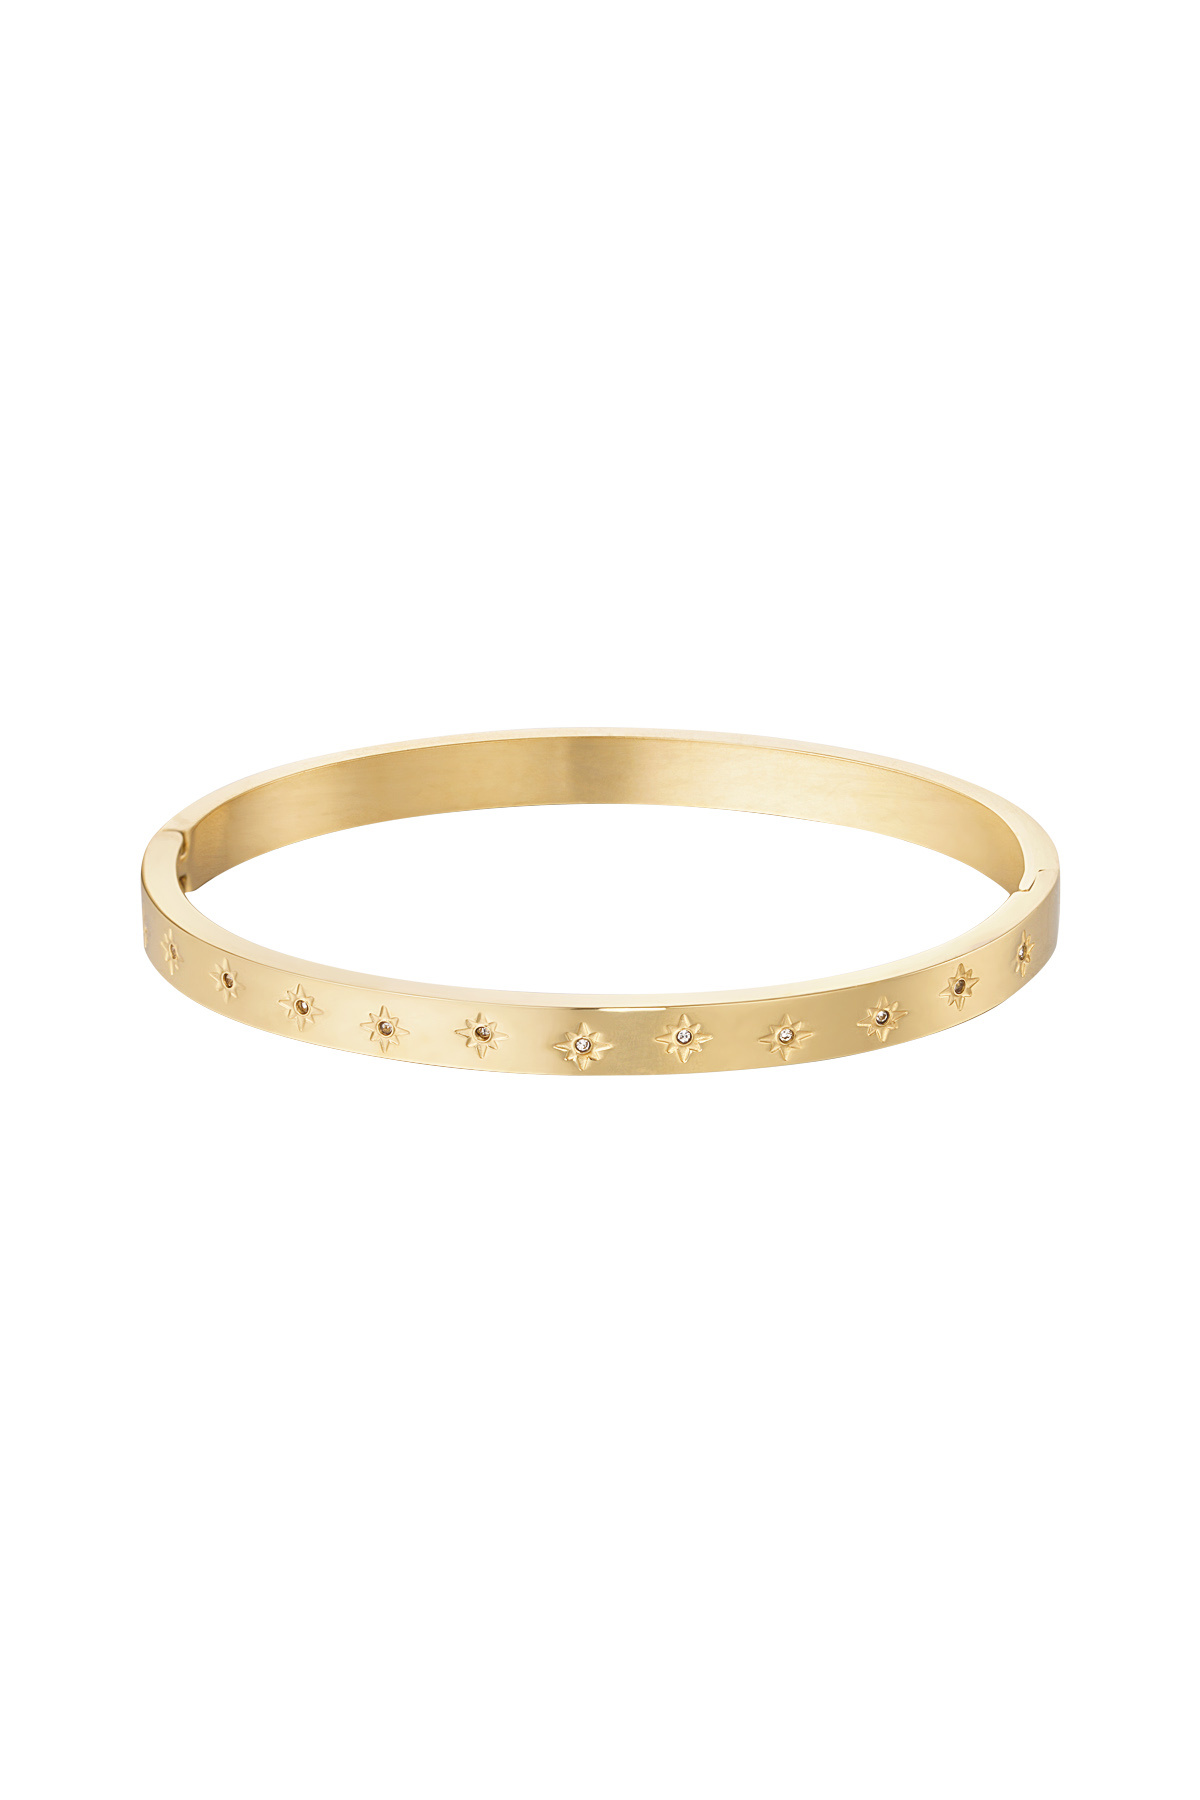 Slave bracelet stars - gold h5 